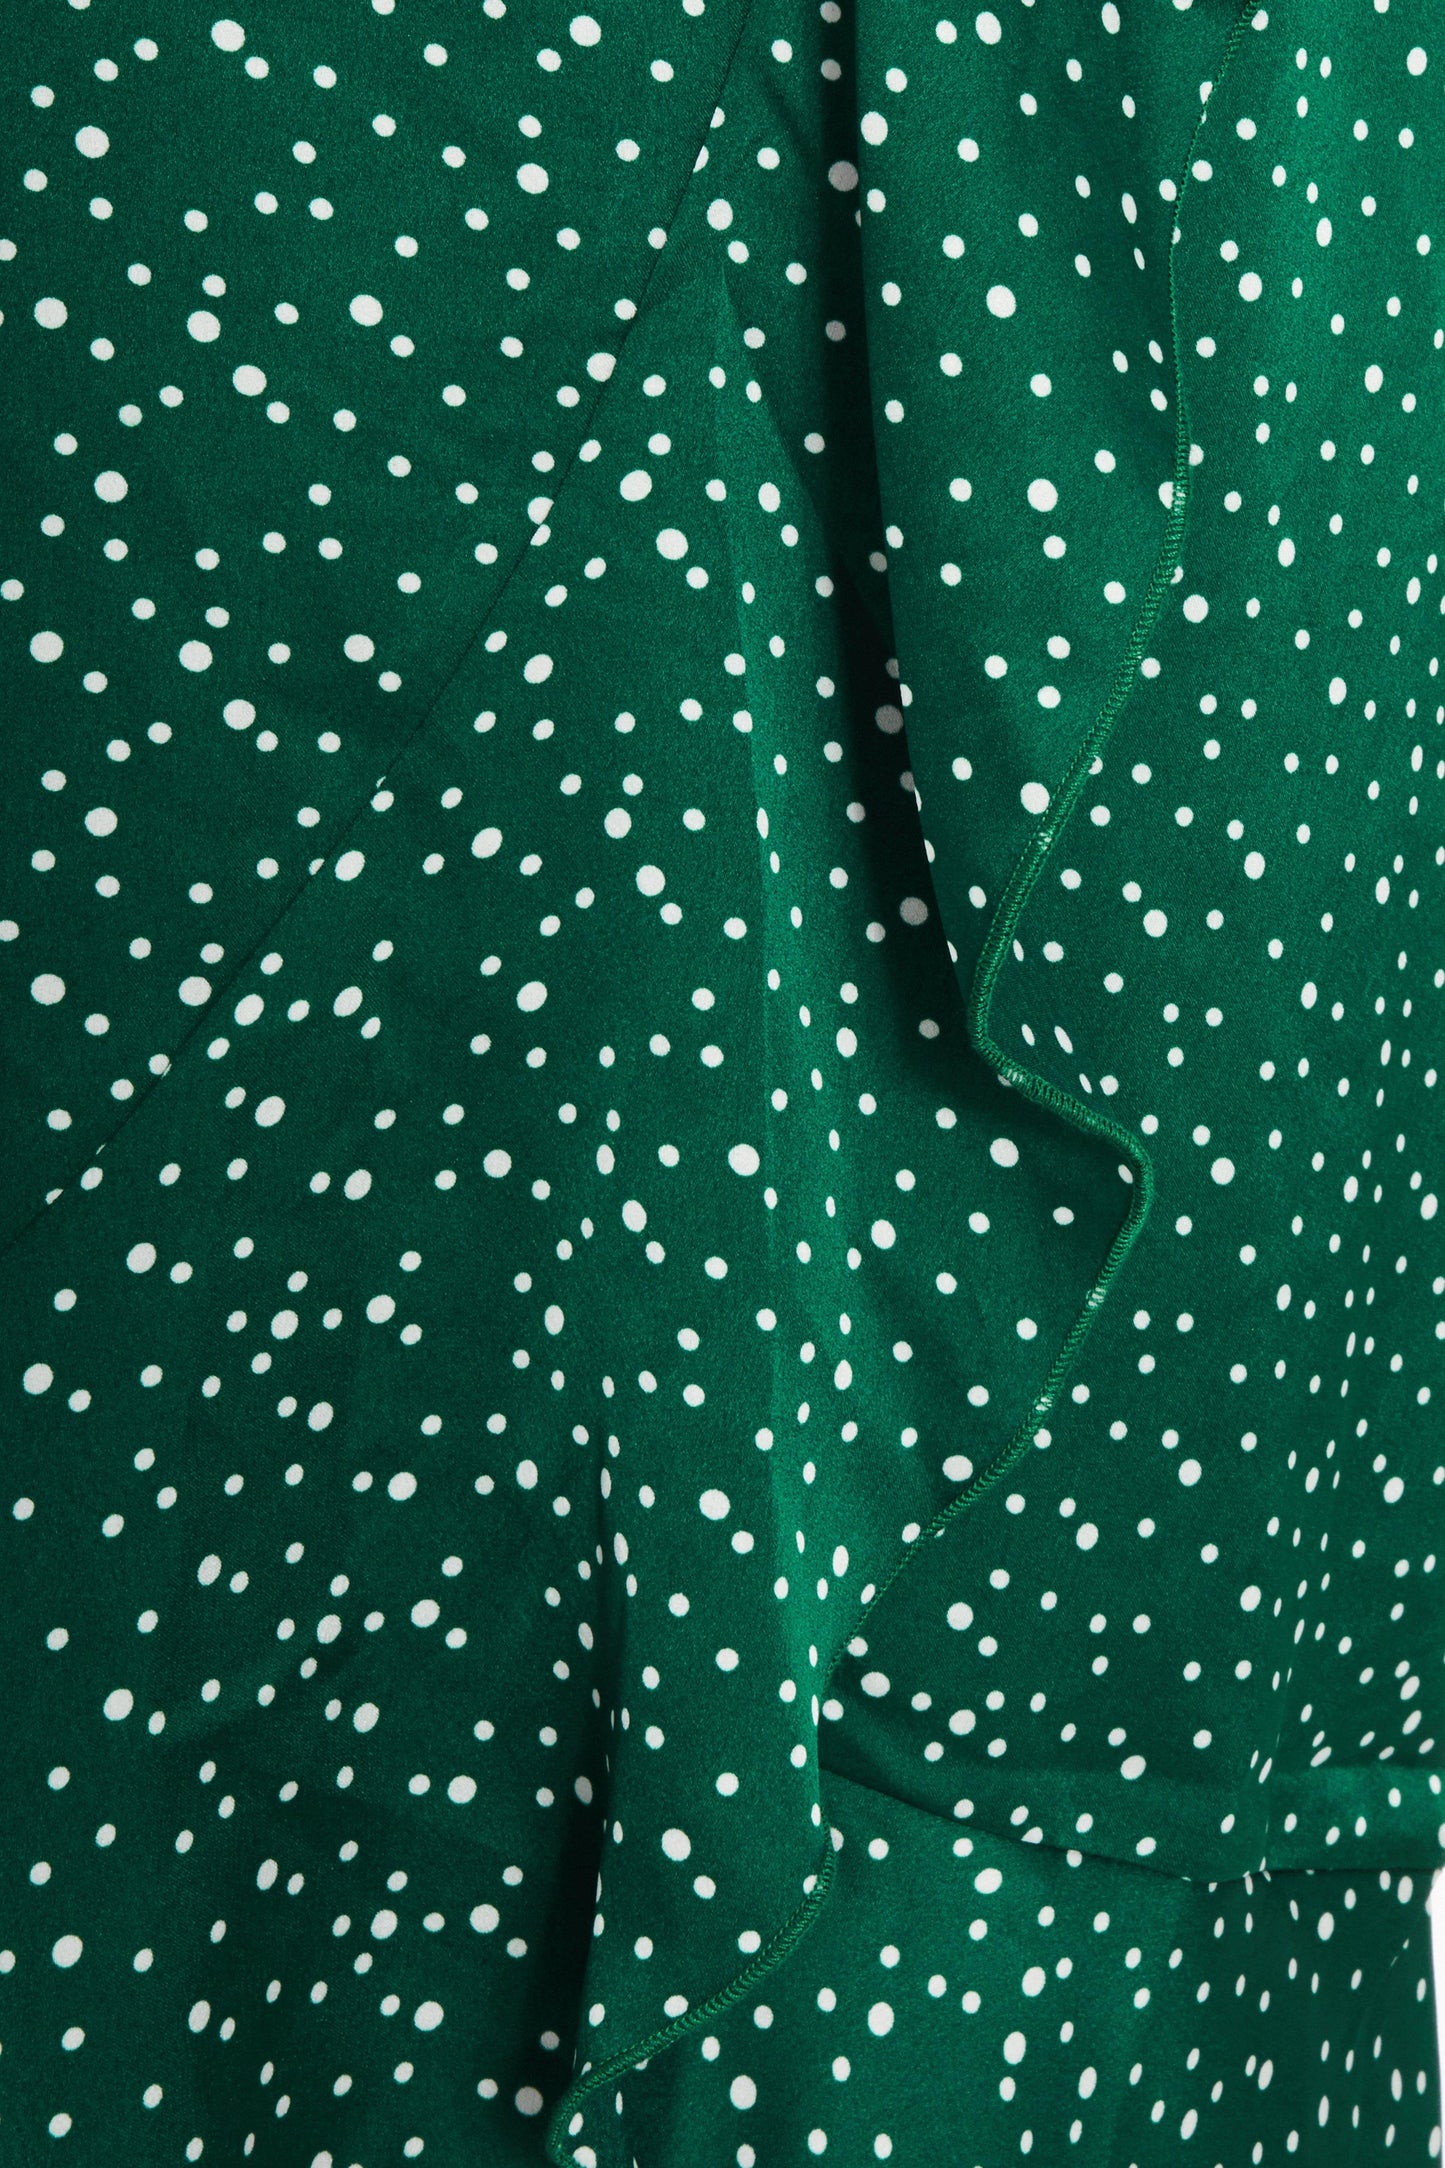 Green Spot Print Wrap Midi Dress